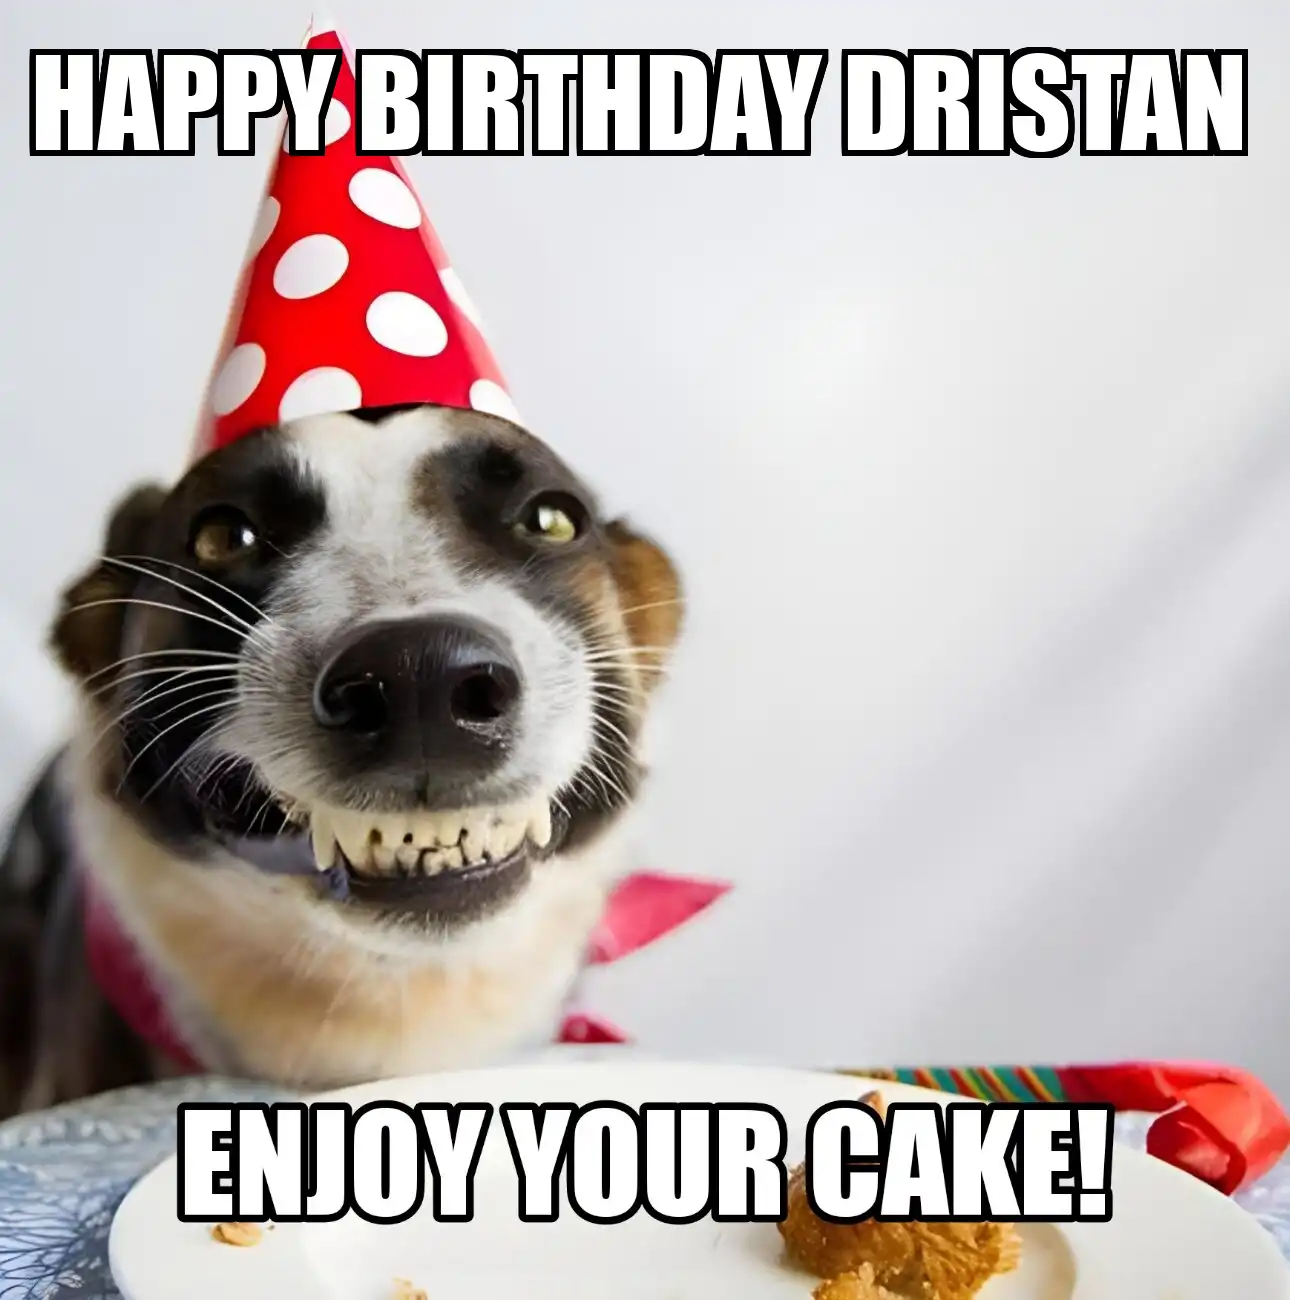 Happy Birthday Dristan Enjoy Your Cake Dog Meme